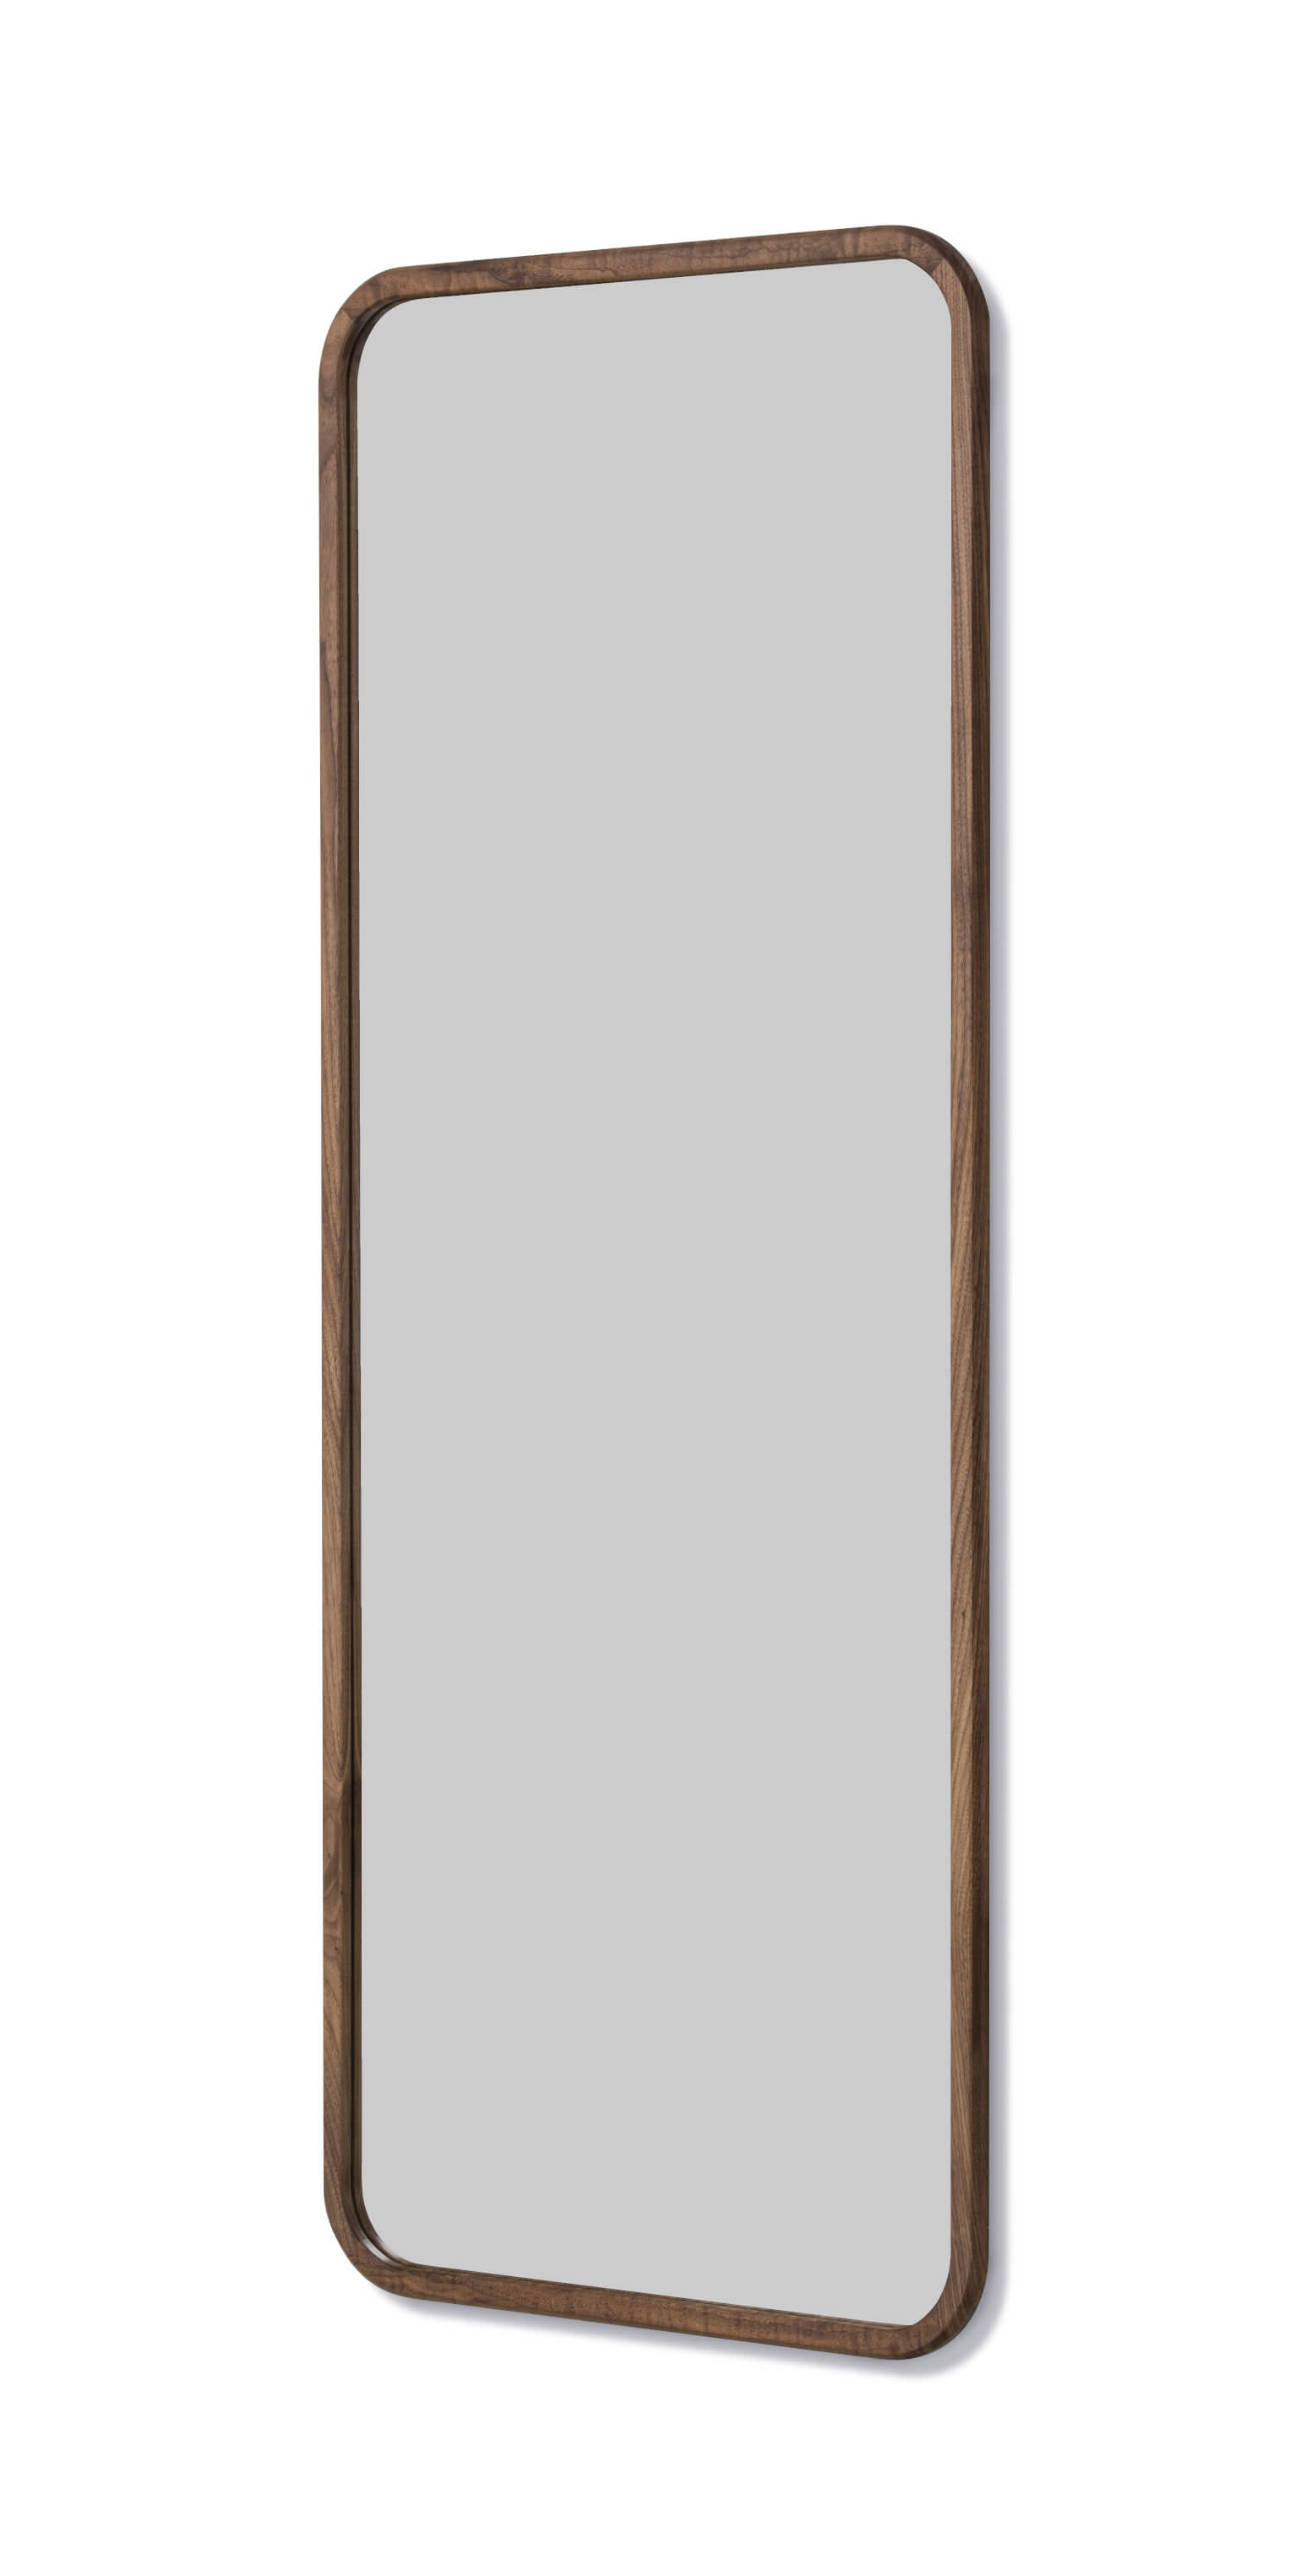 Silhouette Spiegel, 70 x 70 cm, eiche hell geölt